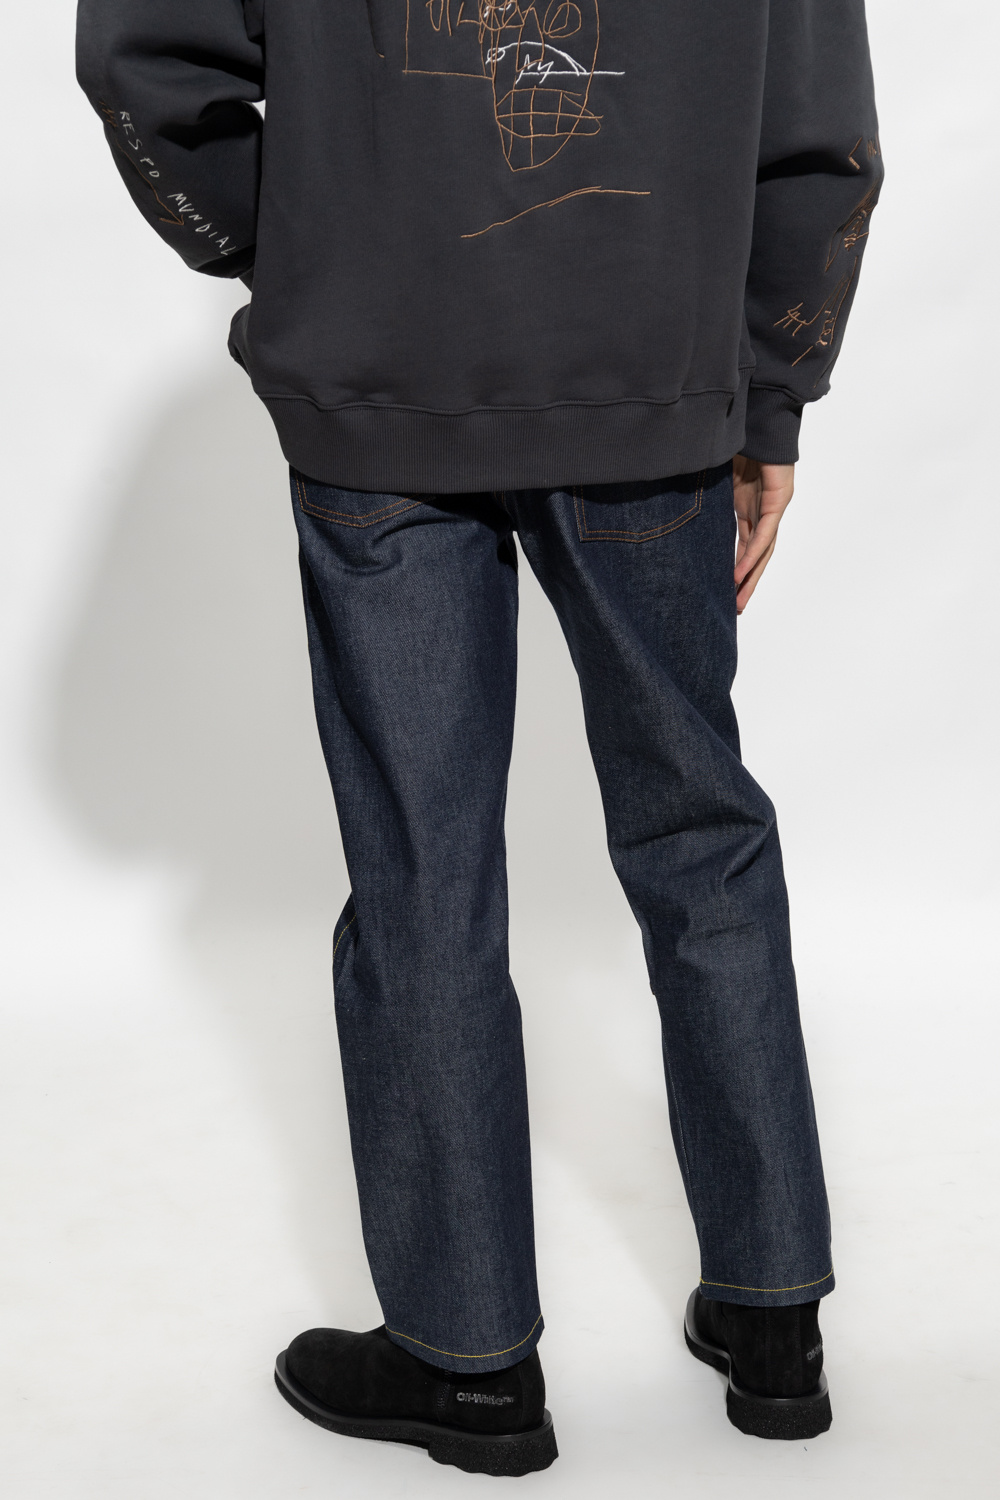 Etudes Calvin Klein Jeans Felpa con cappuccio nera con logo a monogramma rosso